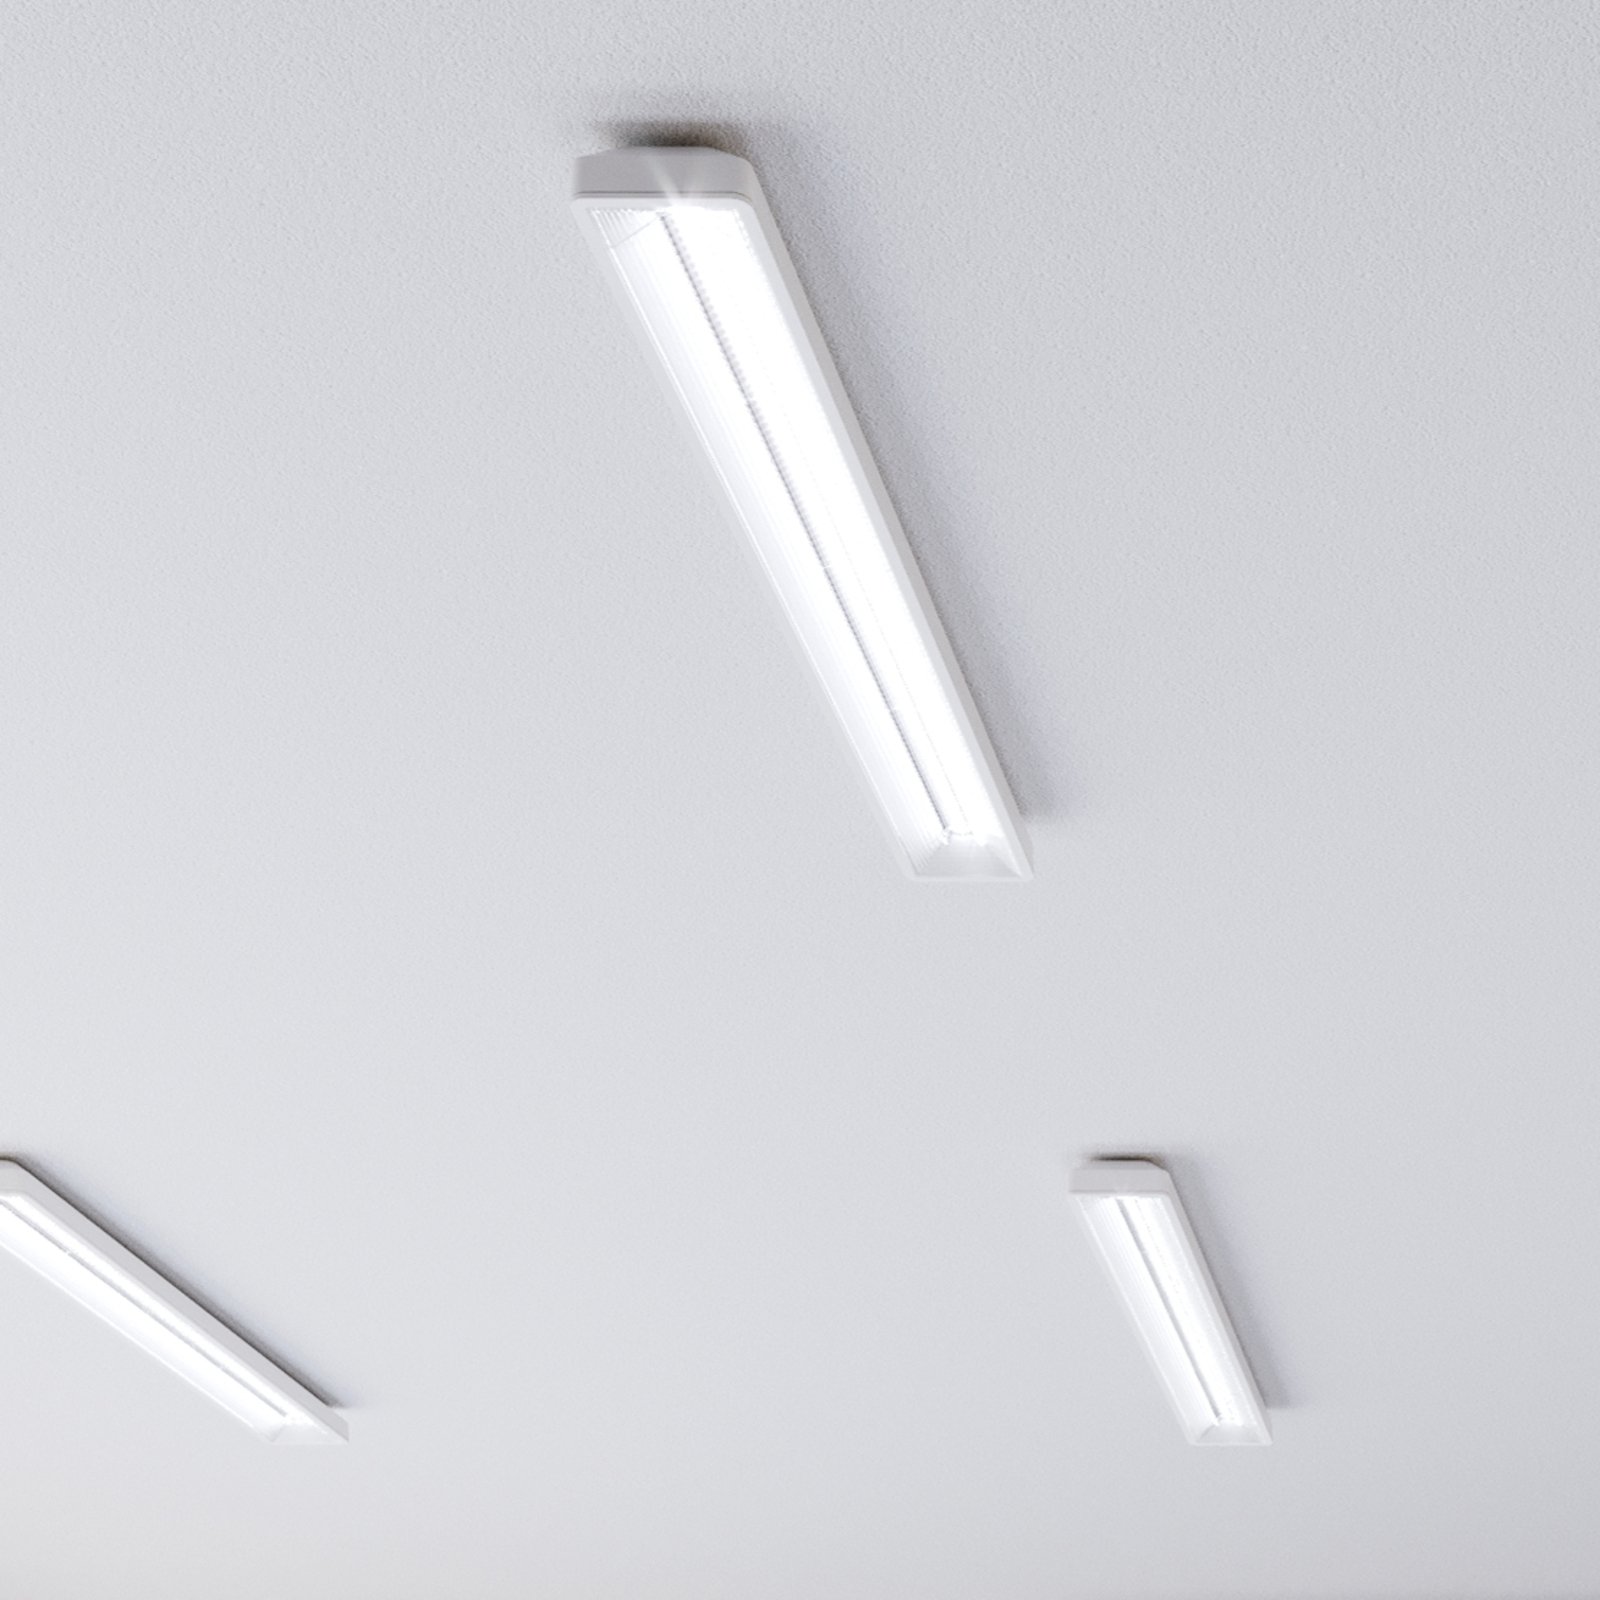 Siteco Taris LED ceiling light 151 cm EB